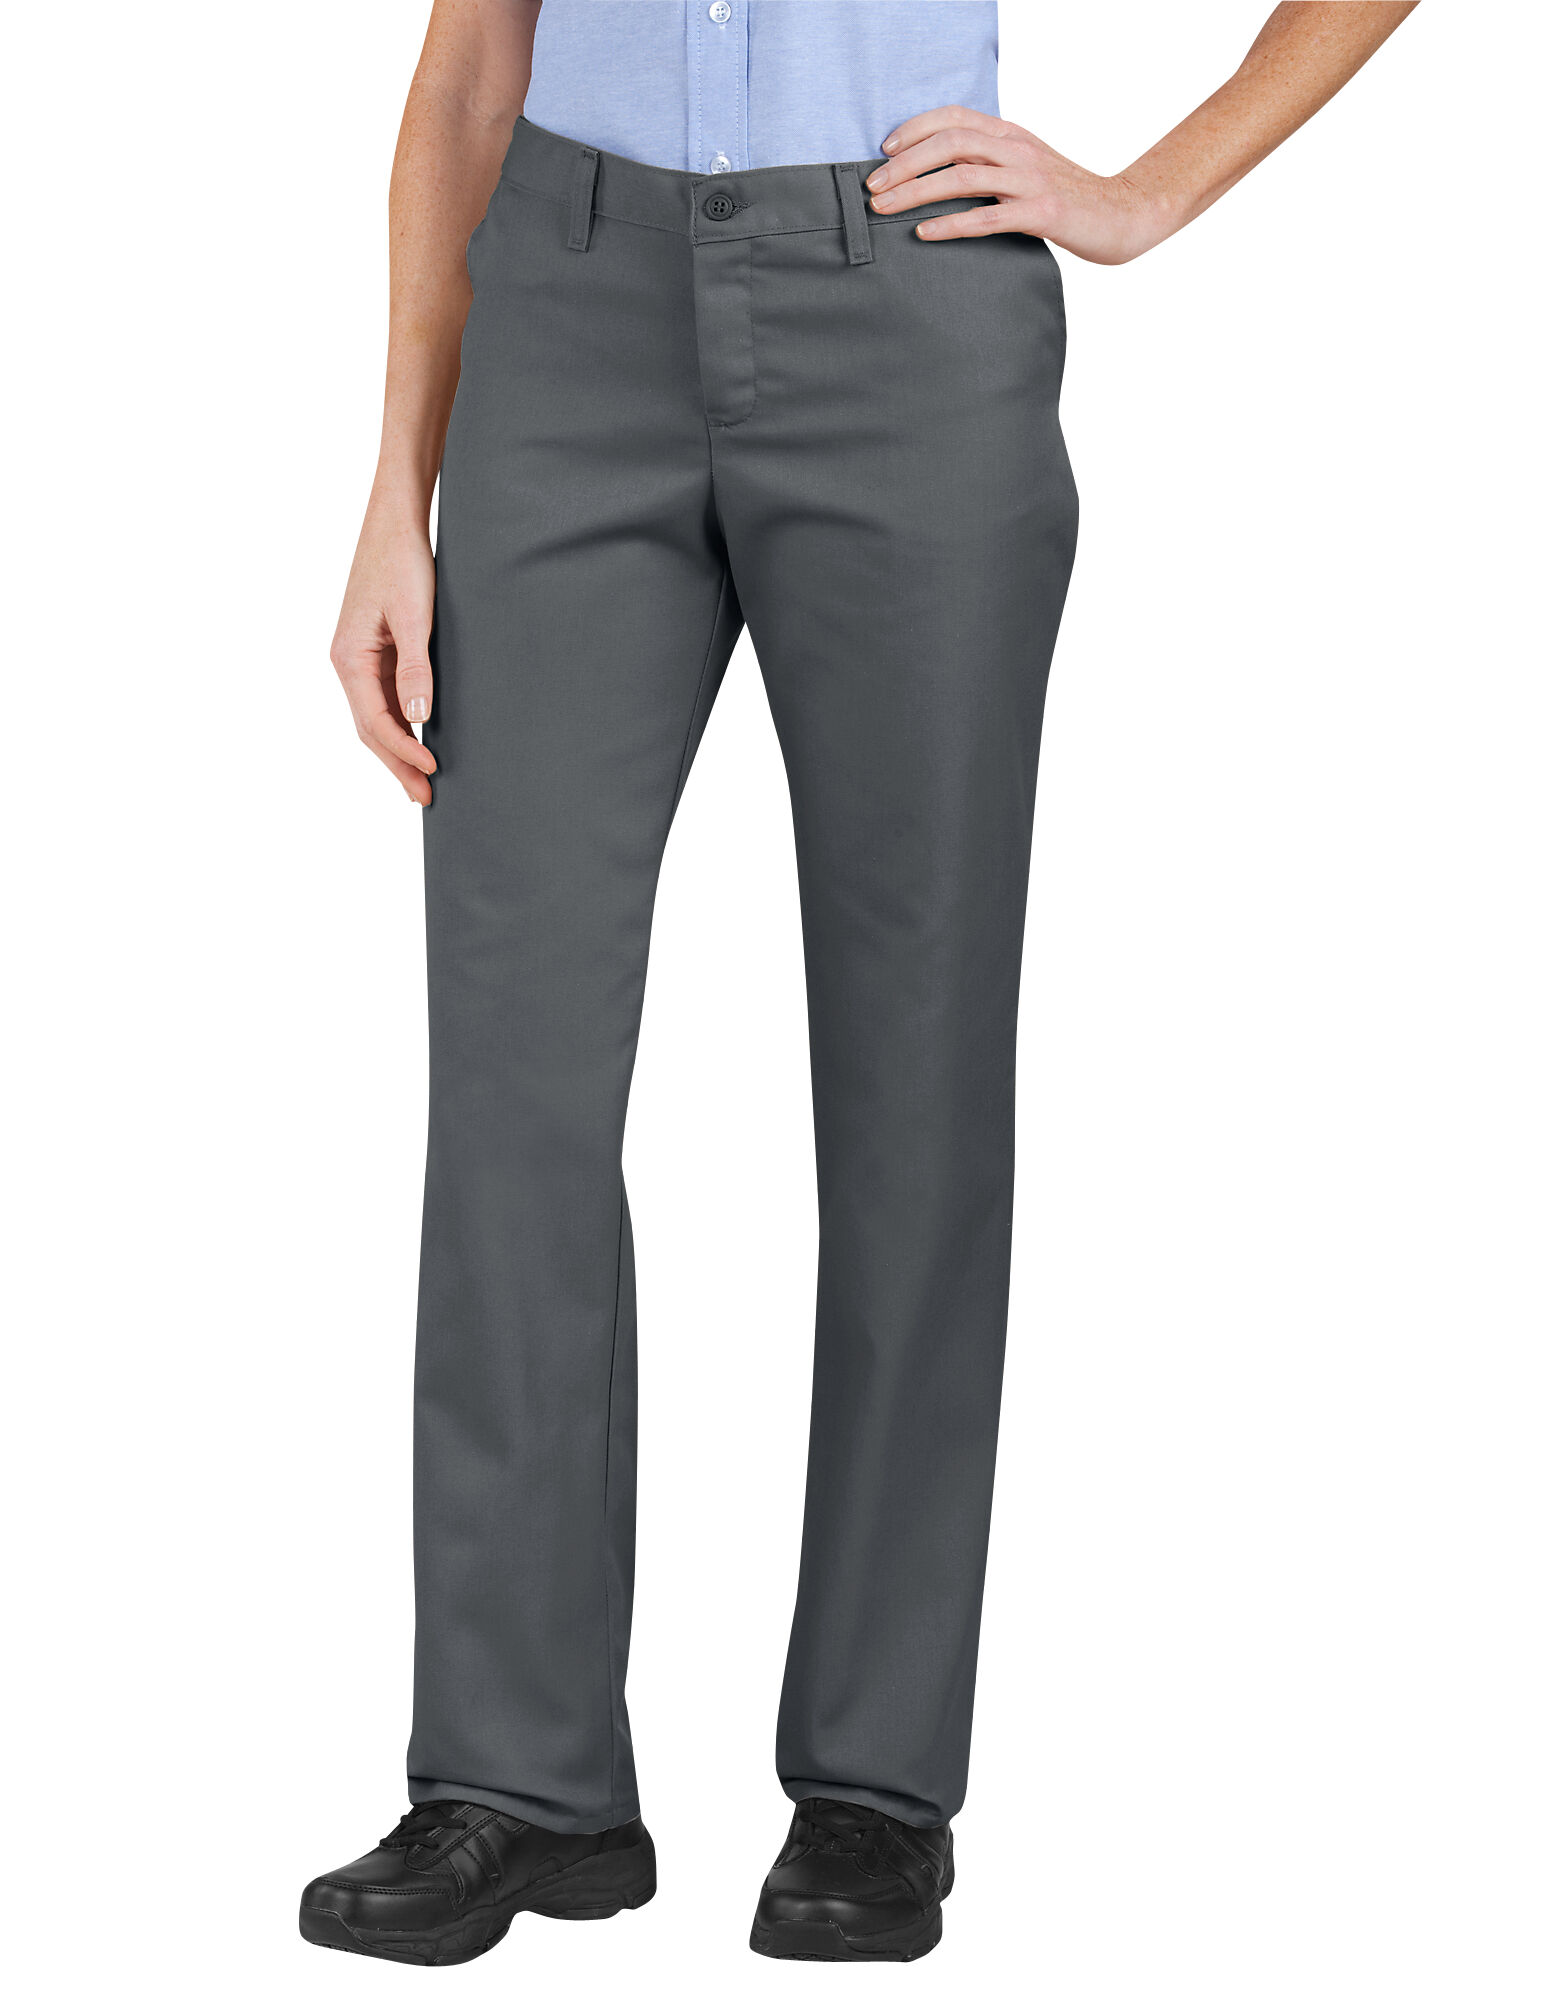 Women's Flat Front Comfort Waist Pants Charcoal Gray | Women's Pants ...